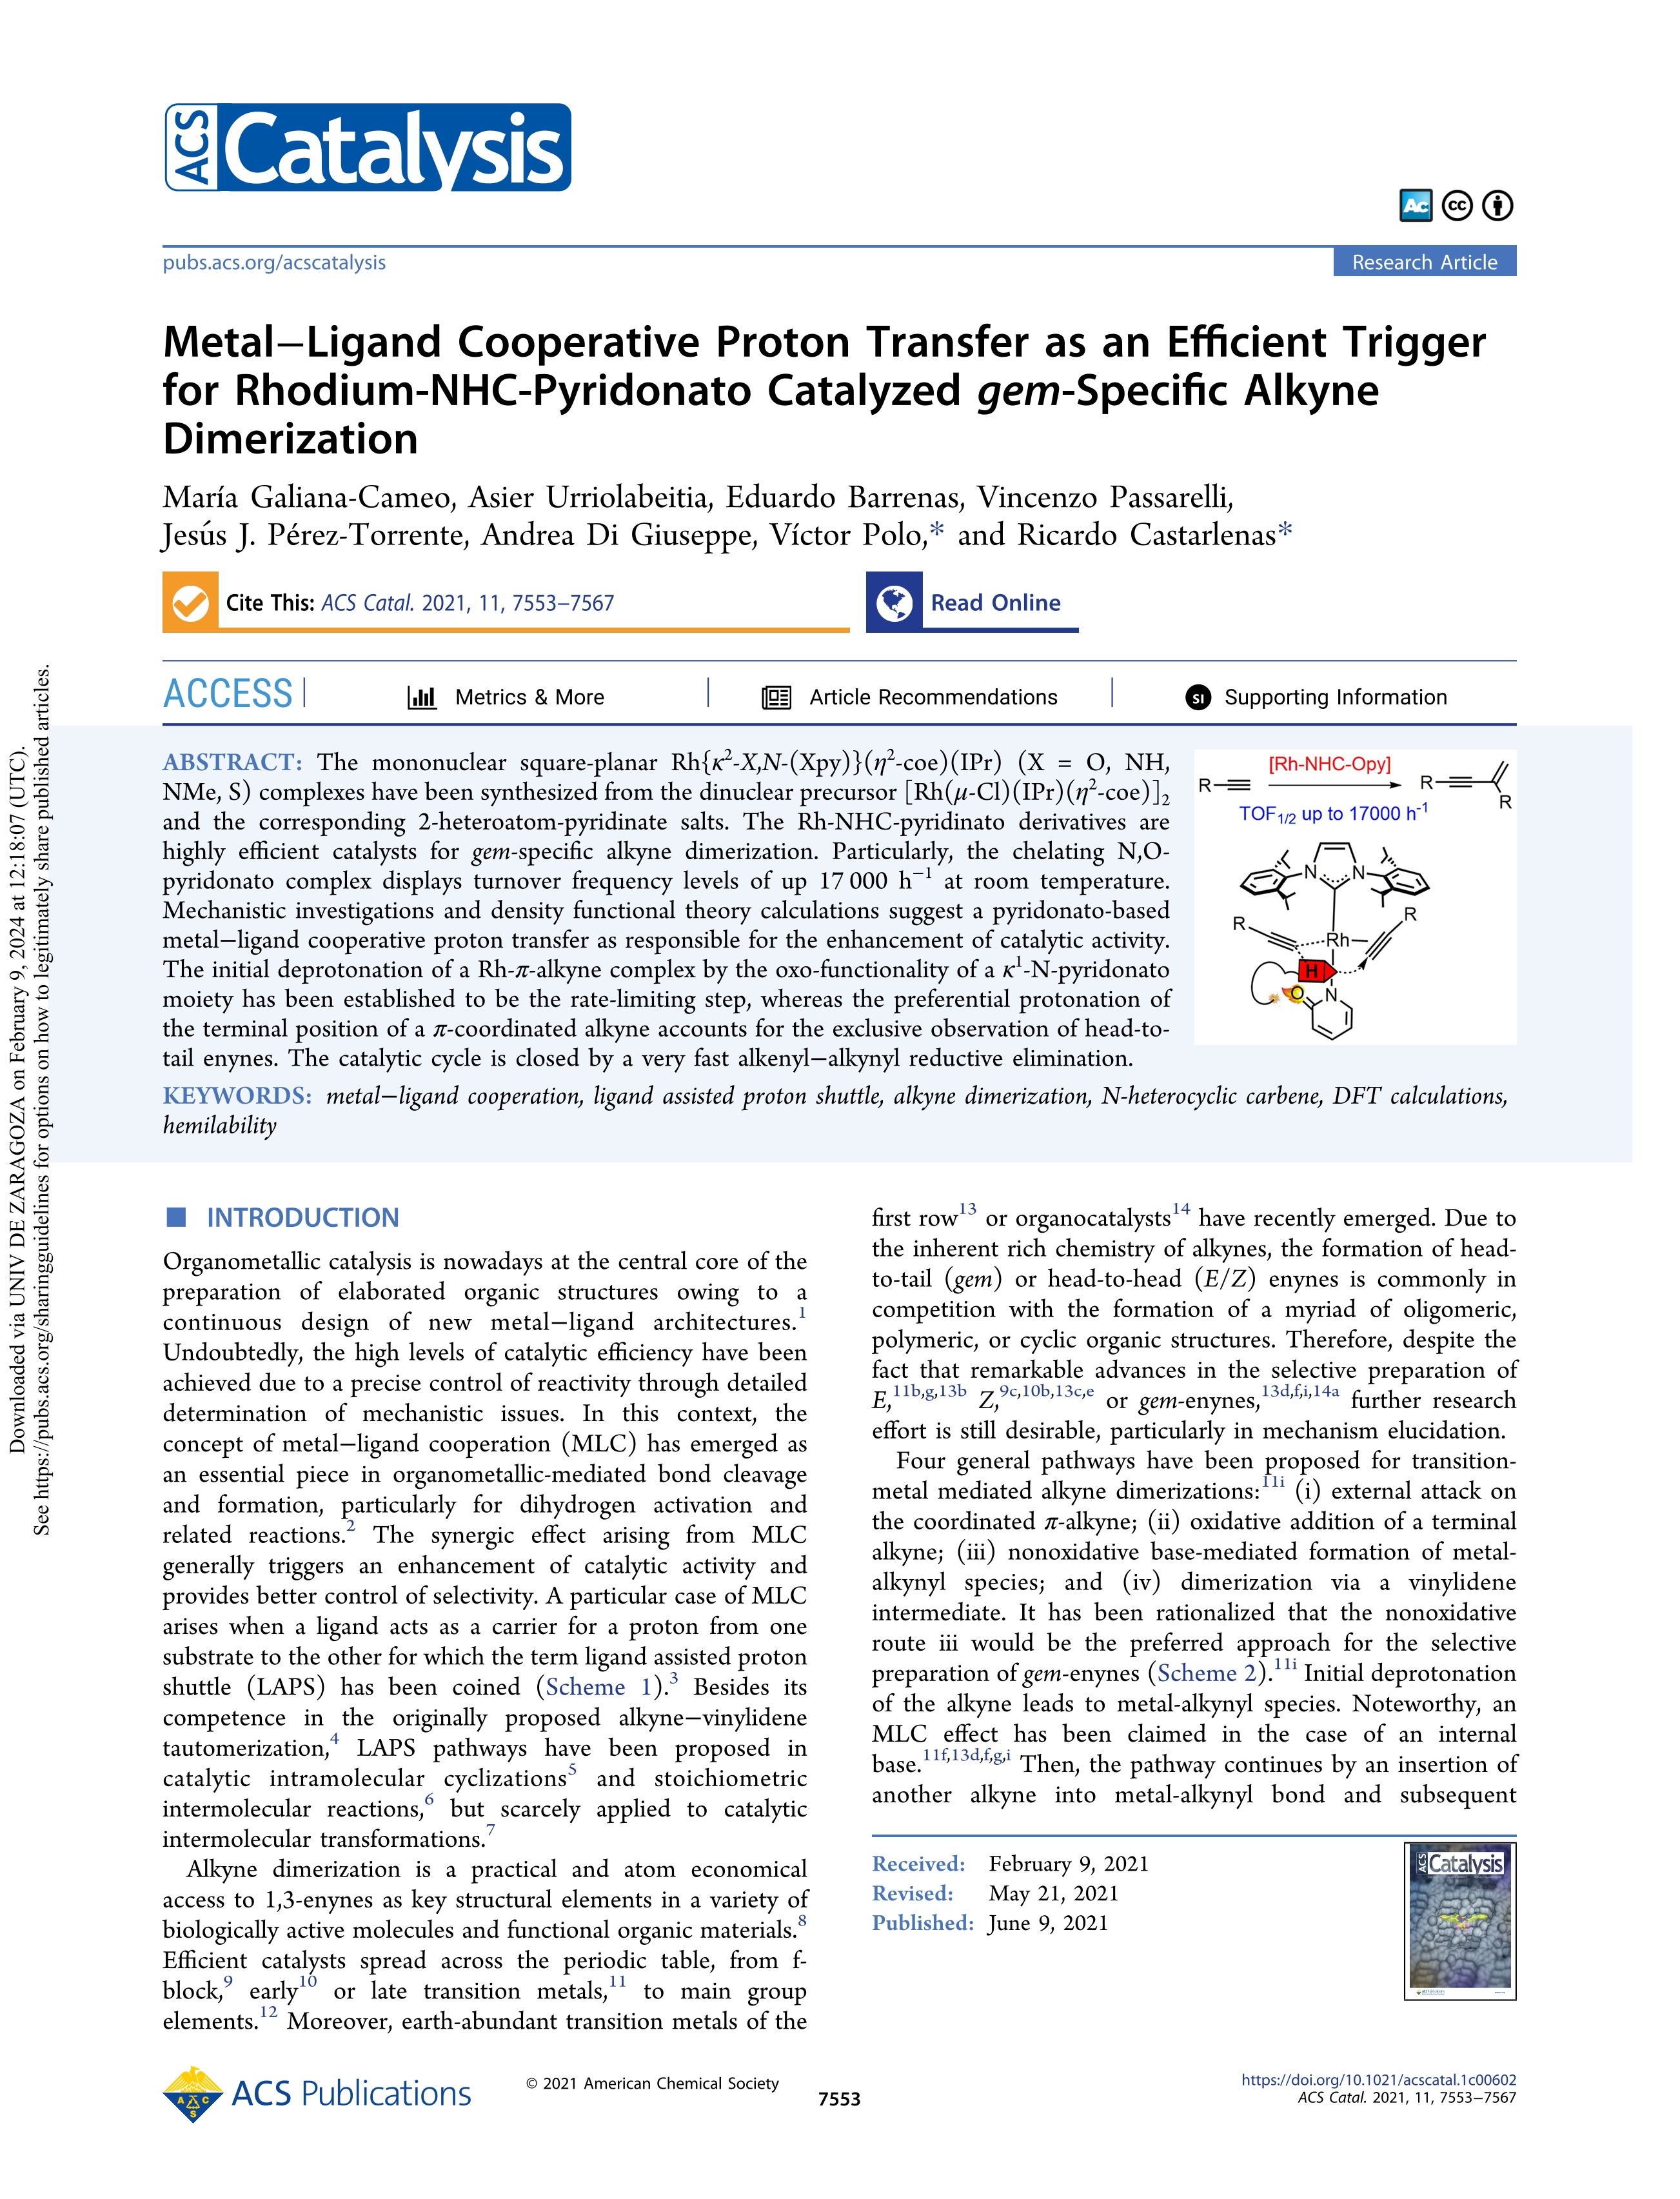 Metal-Ligand Cooperative Proton Transfer as an Efficient Trigger for Rhodium-NHC-Pyridonato Catalyzed gem-Specific Alkyne Dimerization